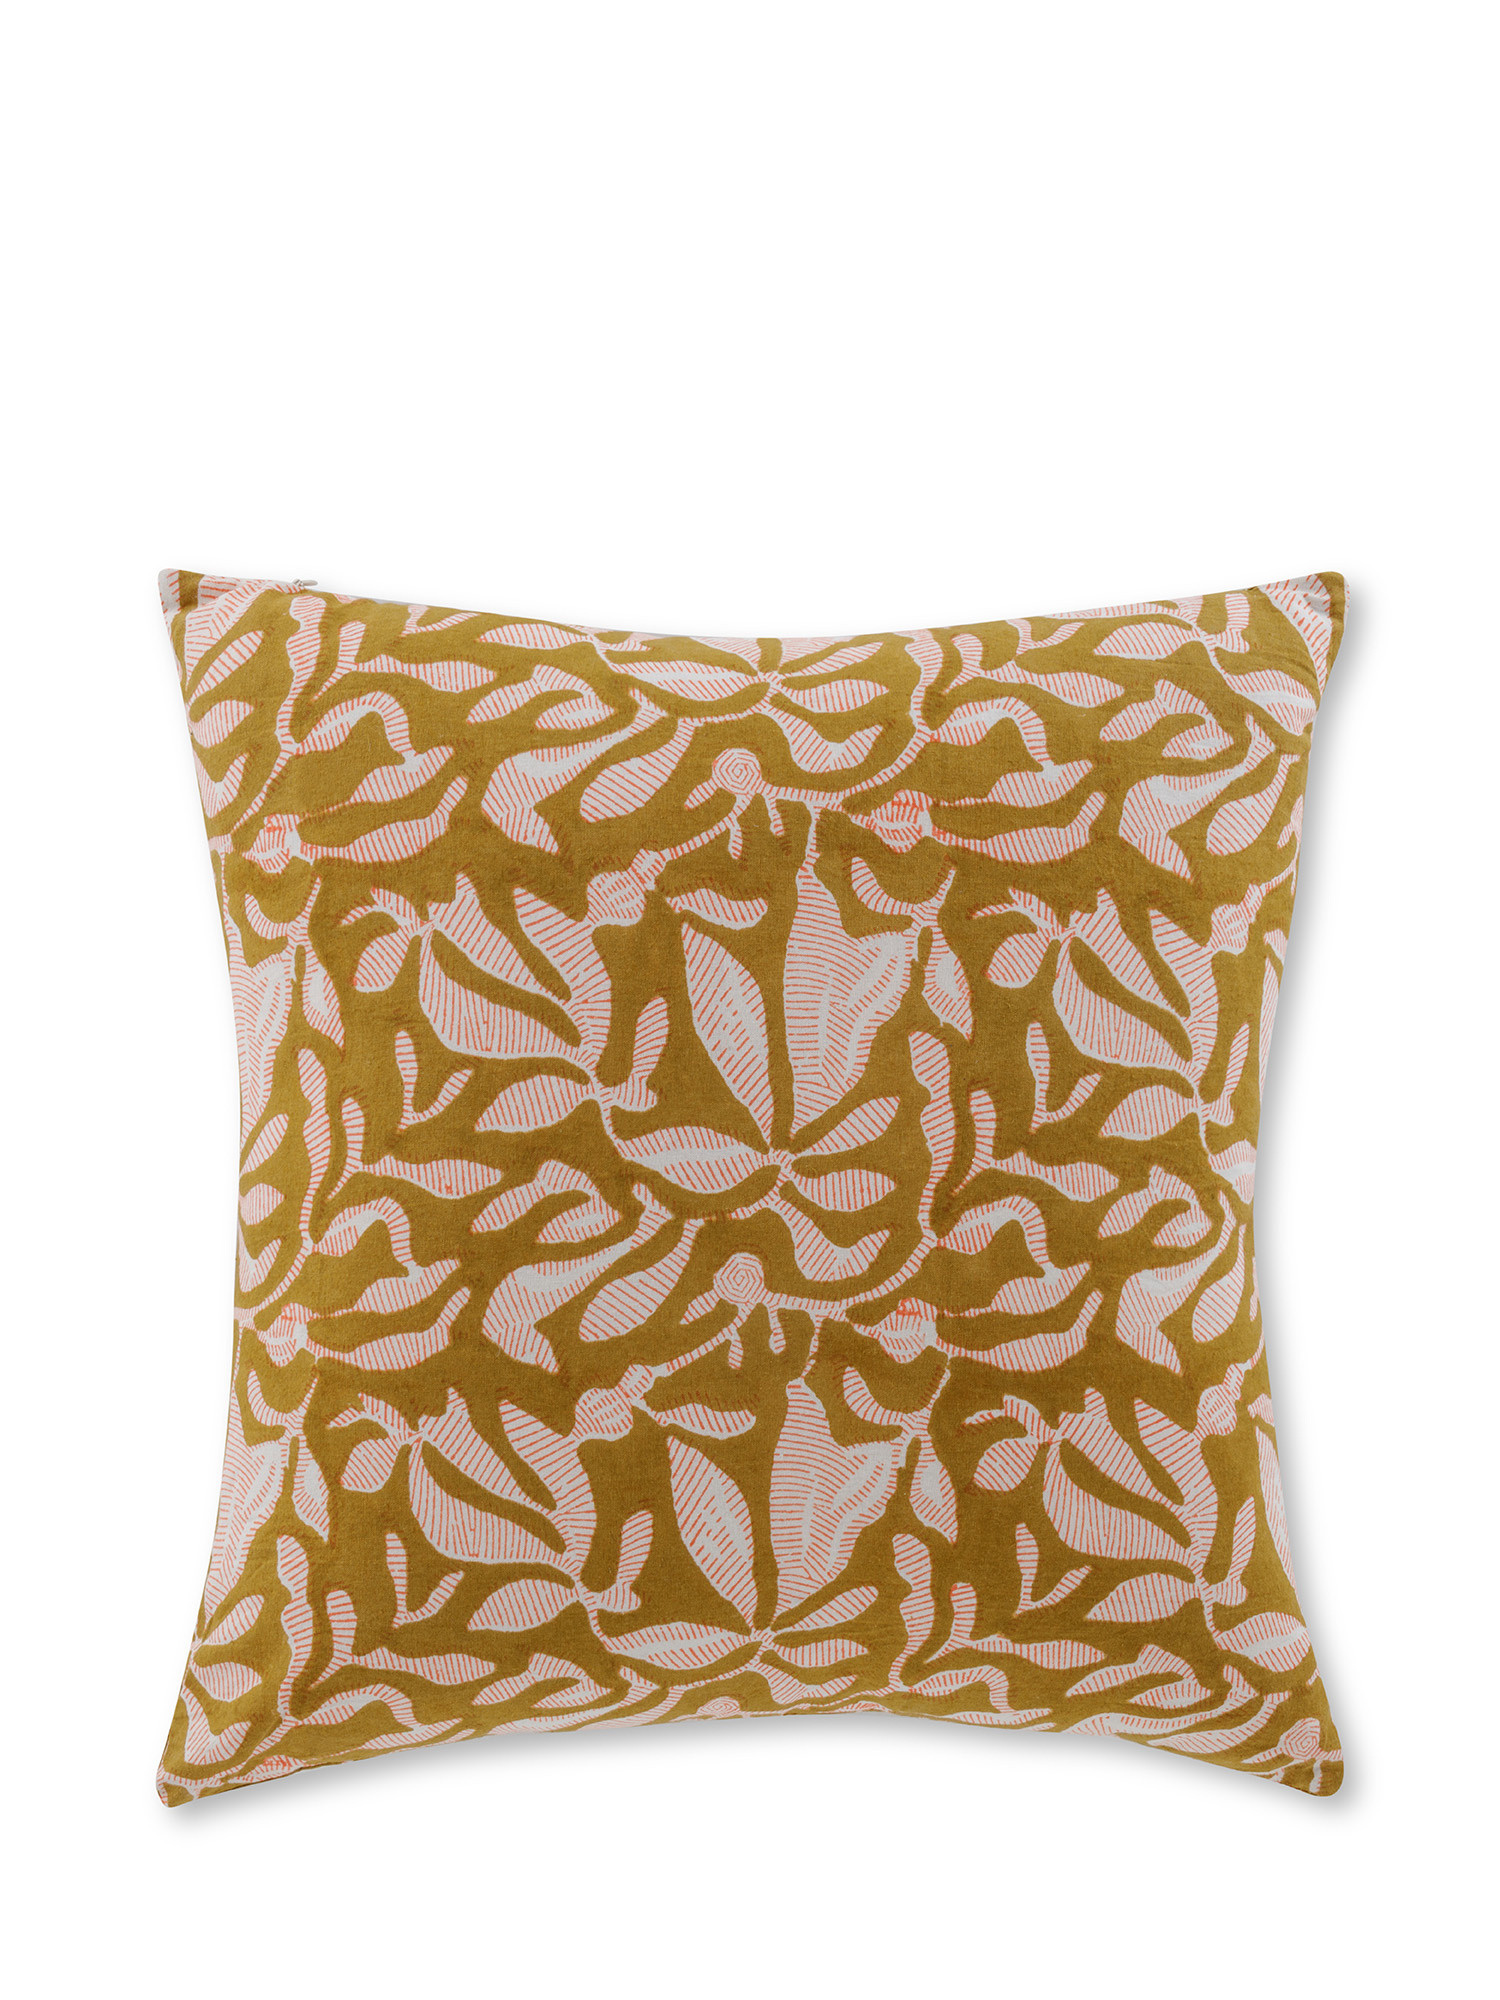 Ethnic flower print fabric cushion 45x45 cm, Multicolor, large image number 1